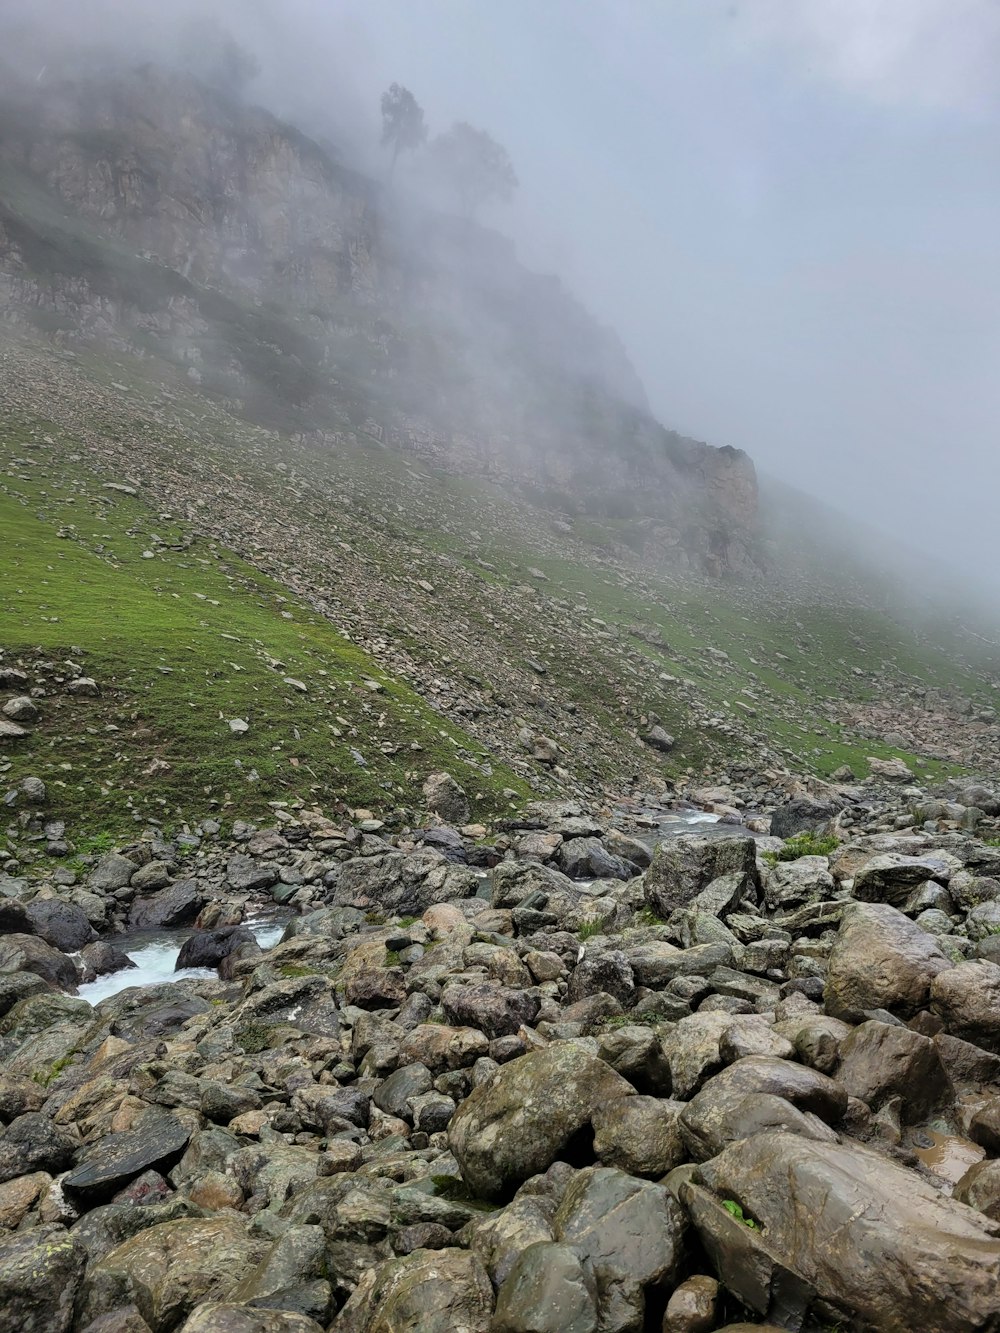 a rocky area with a foggy sky above